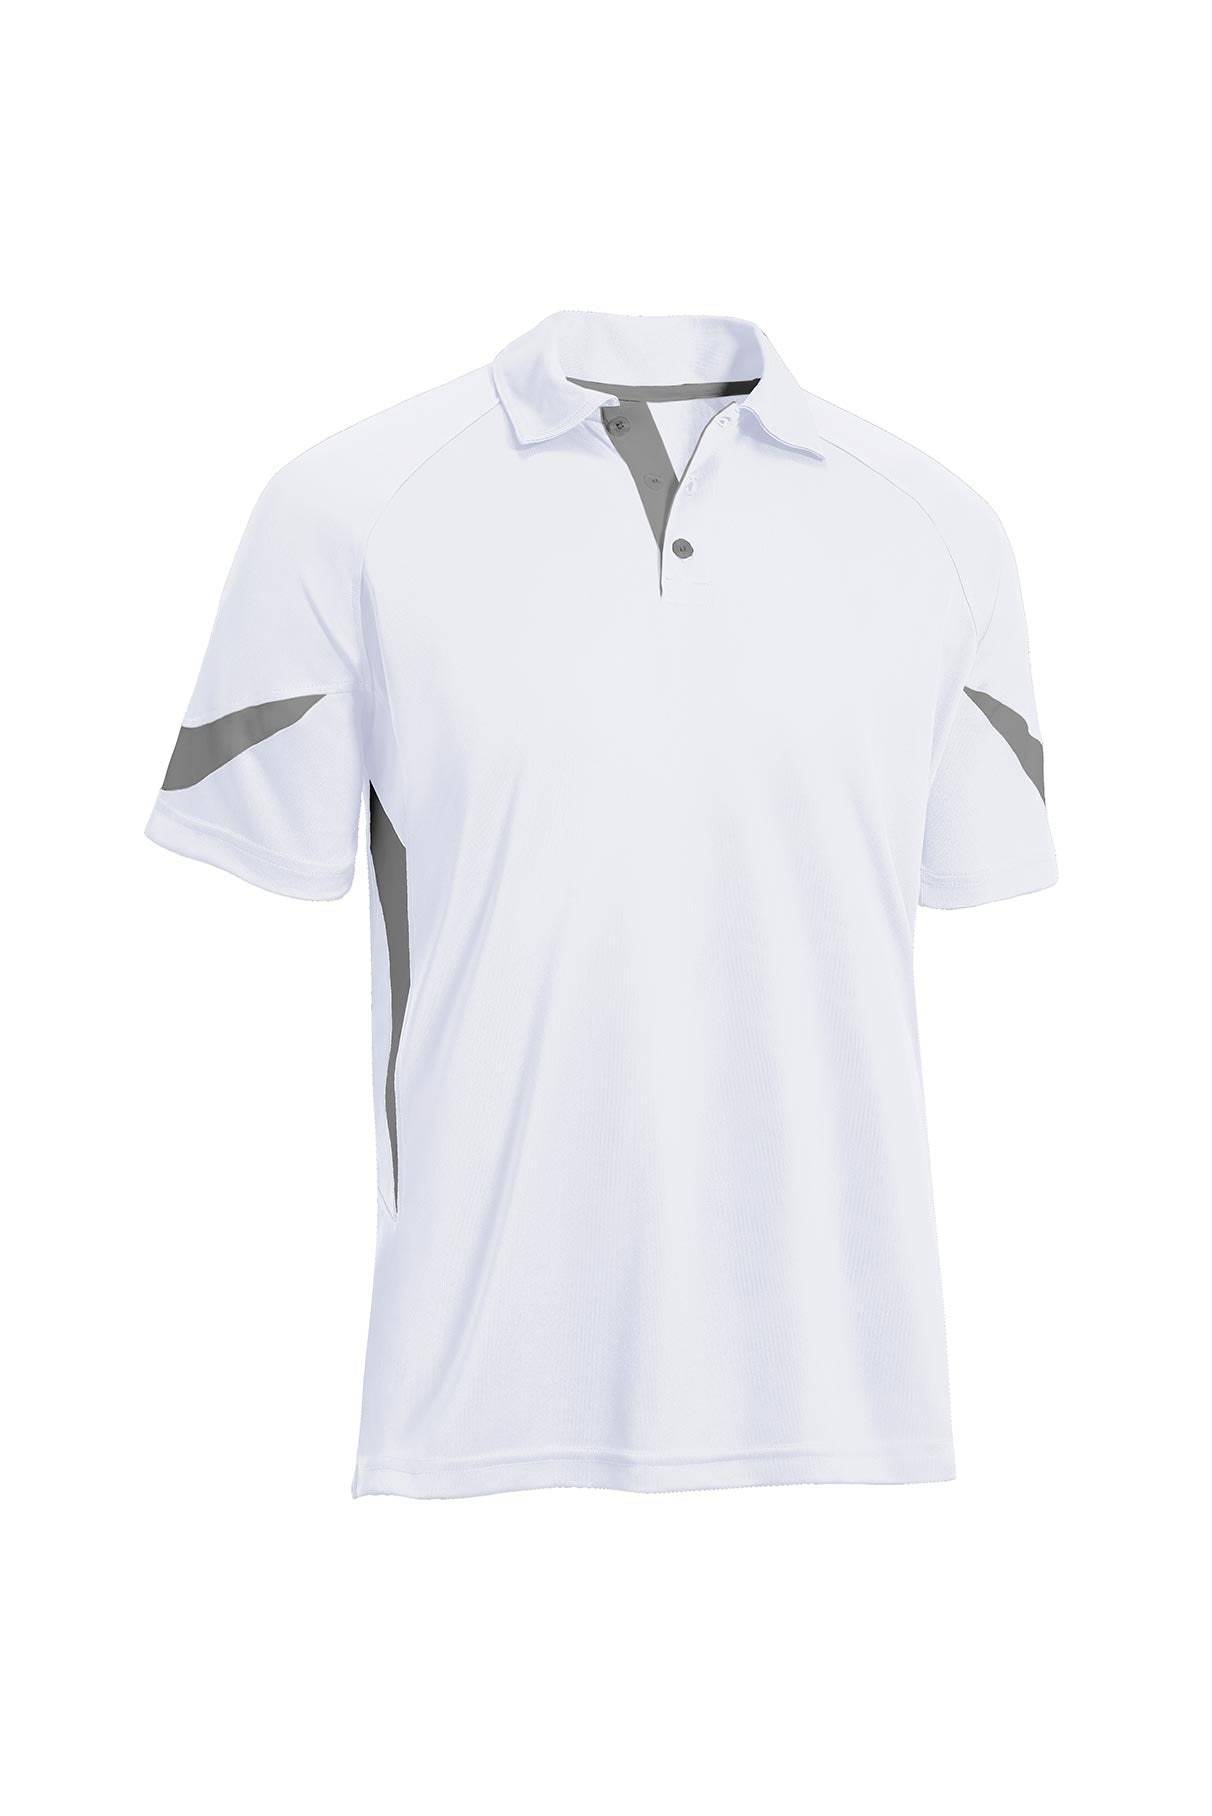 Expert Brand Wholesale Blank Men's Tennis Polo white#white